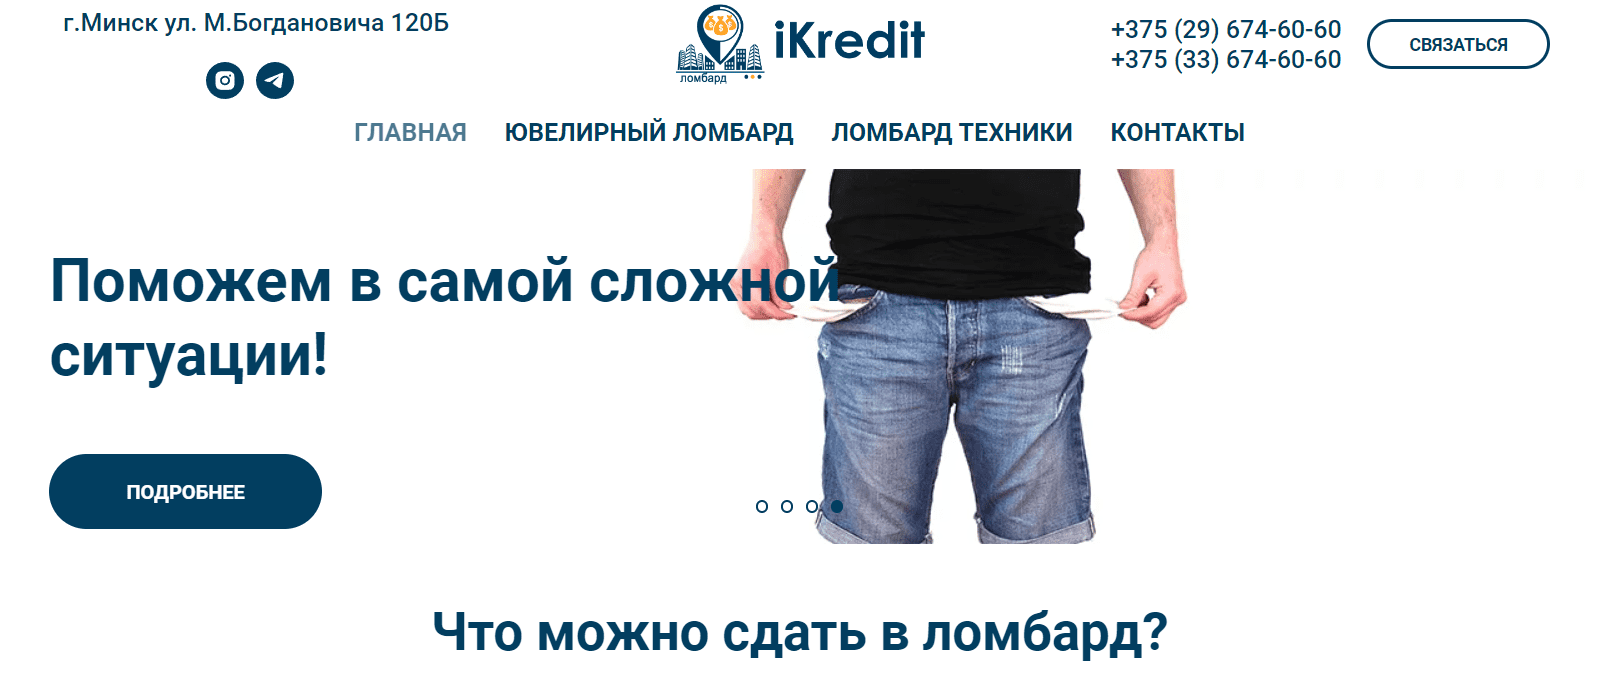 iKredit.by - официальный сайт